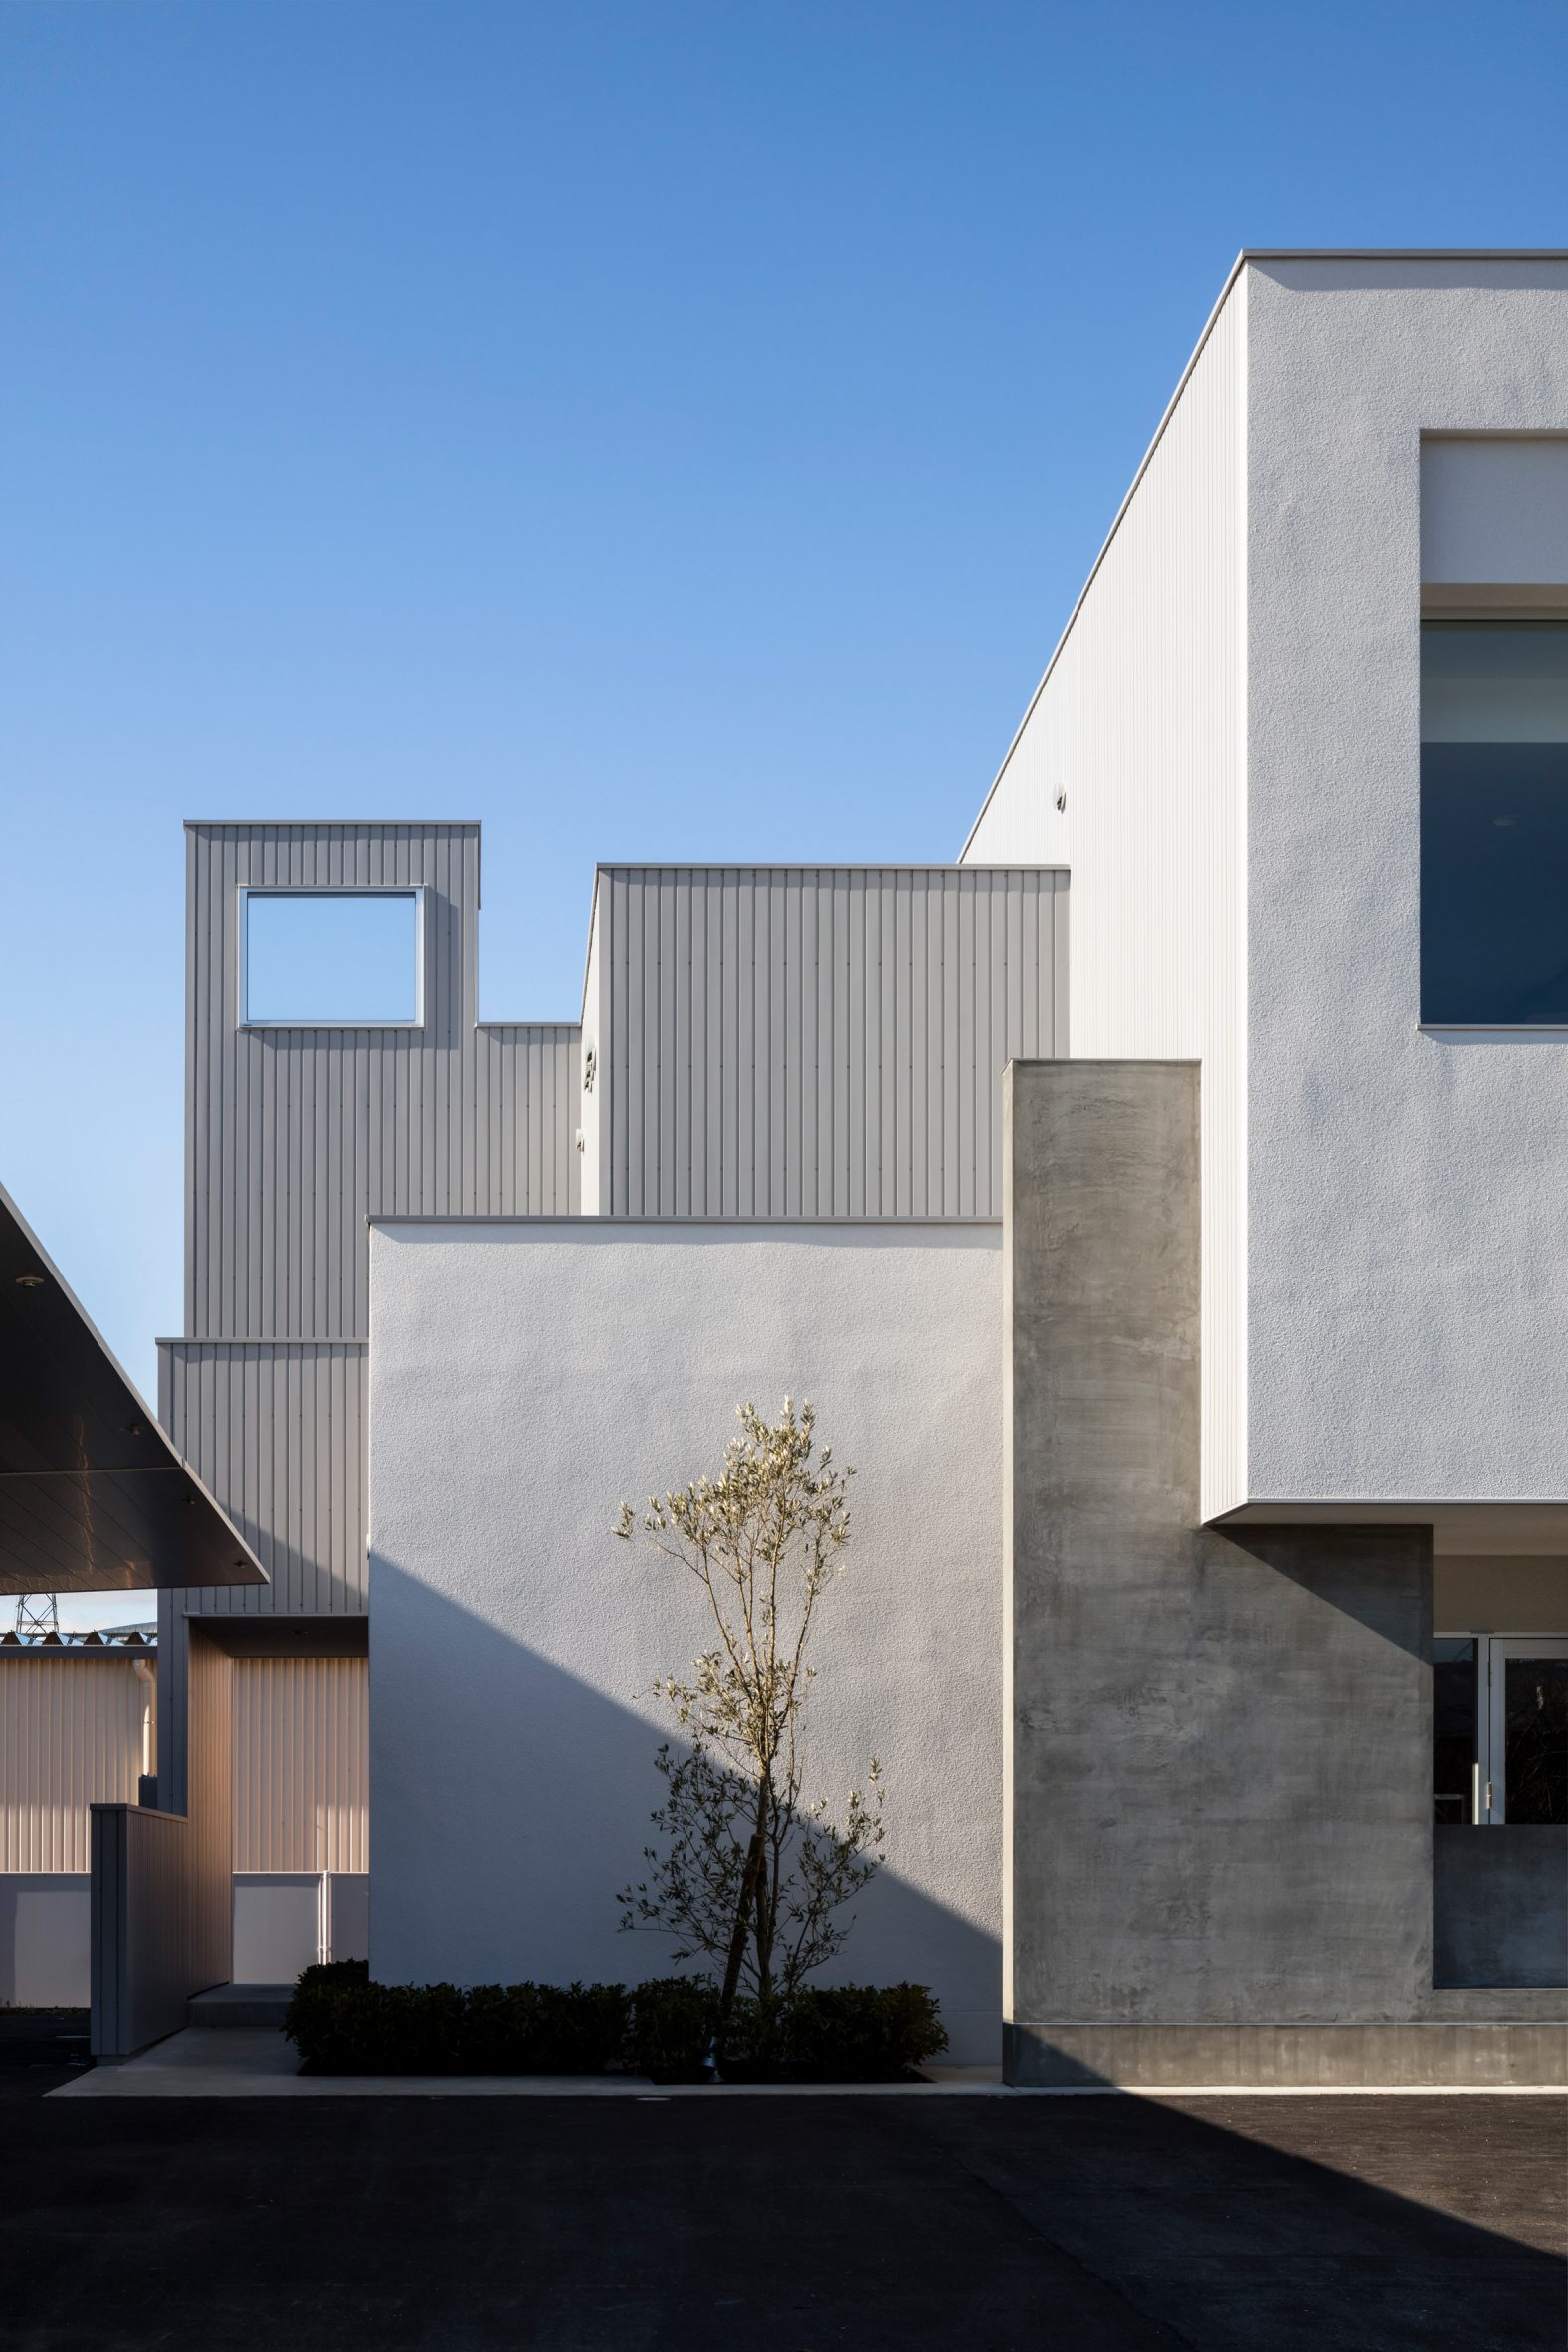 A geometric Japanese house